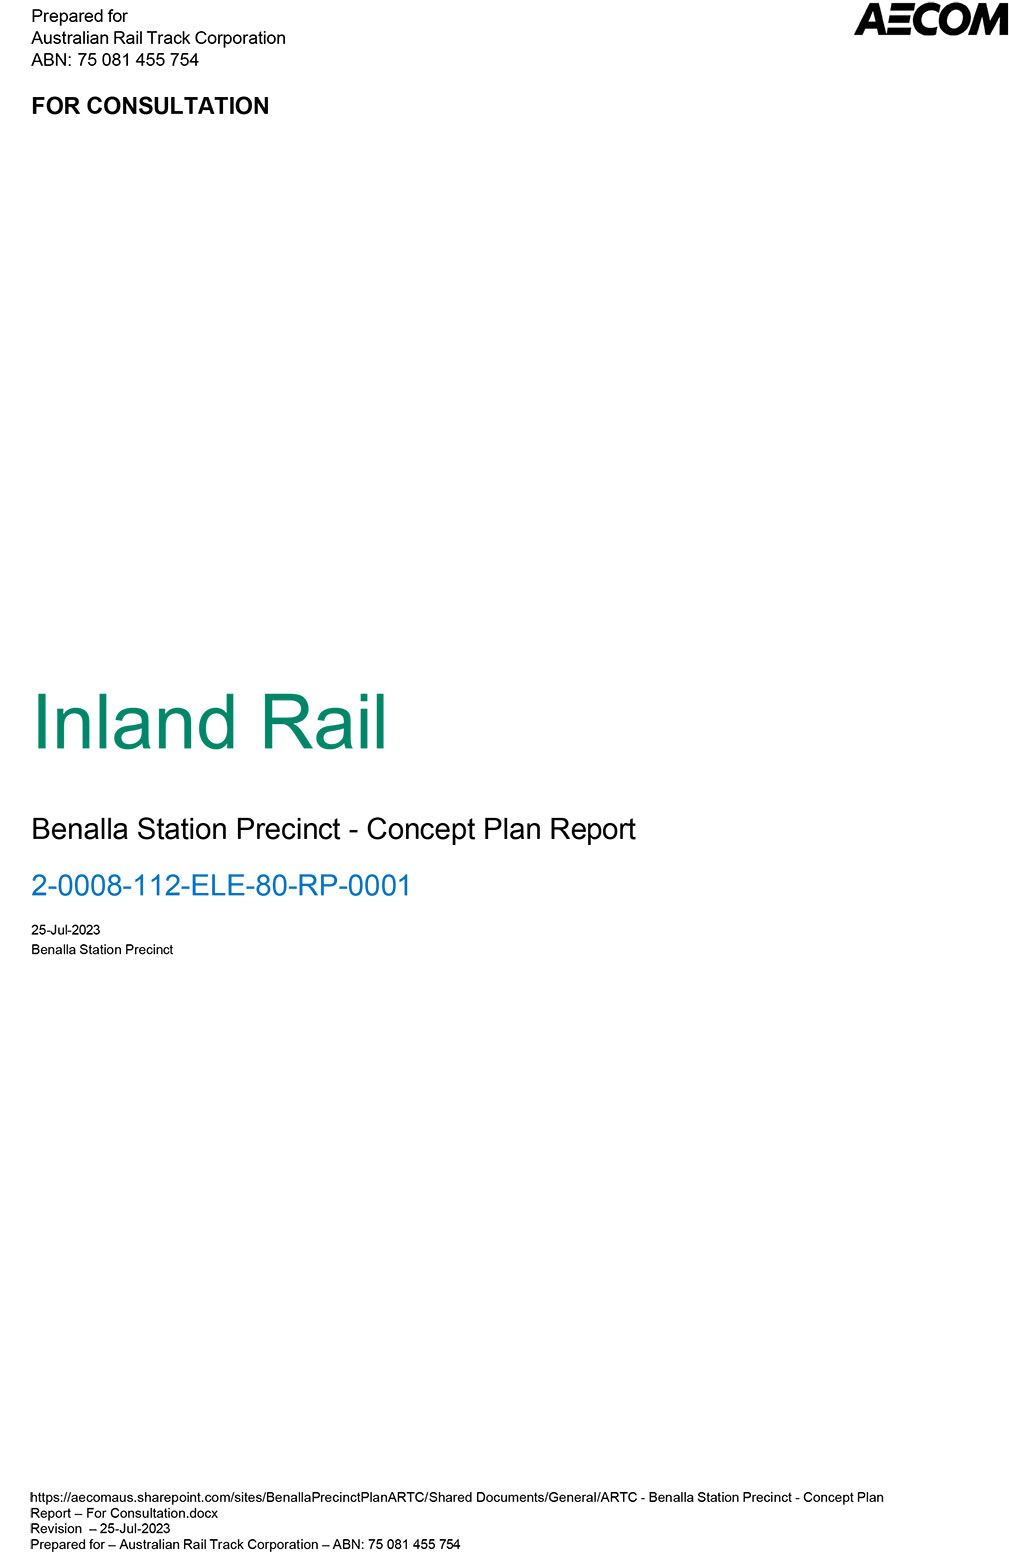 Document thumbnail for Benalla Station Precinct Concept Plan Report